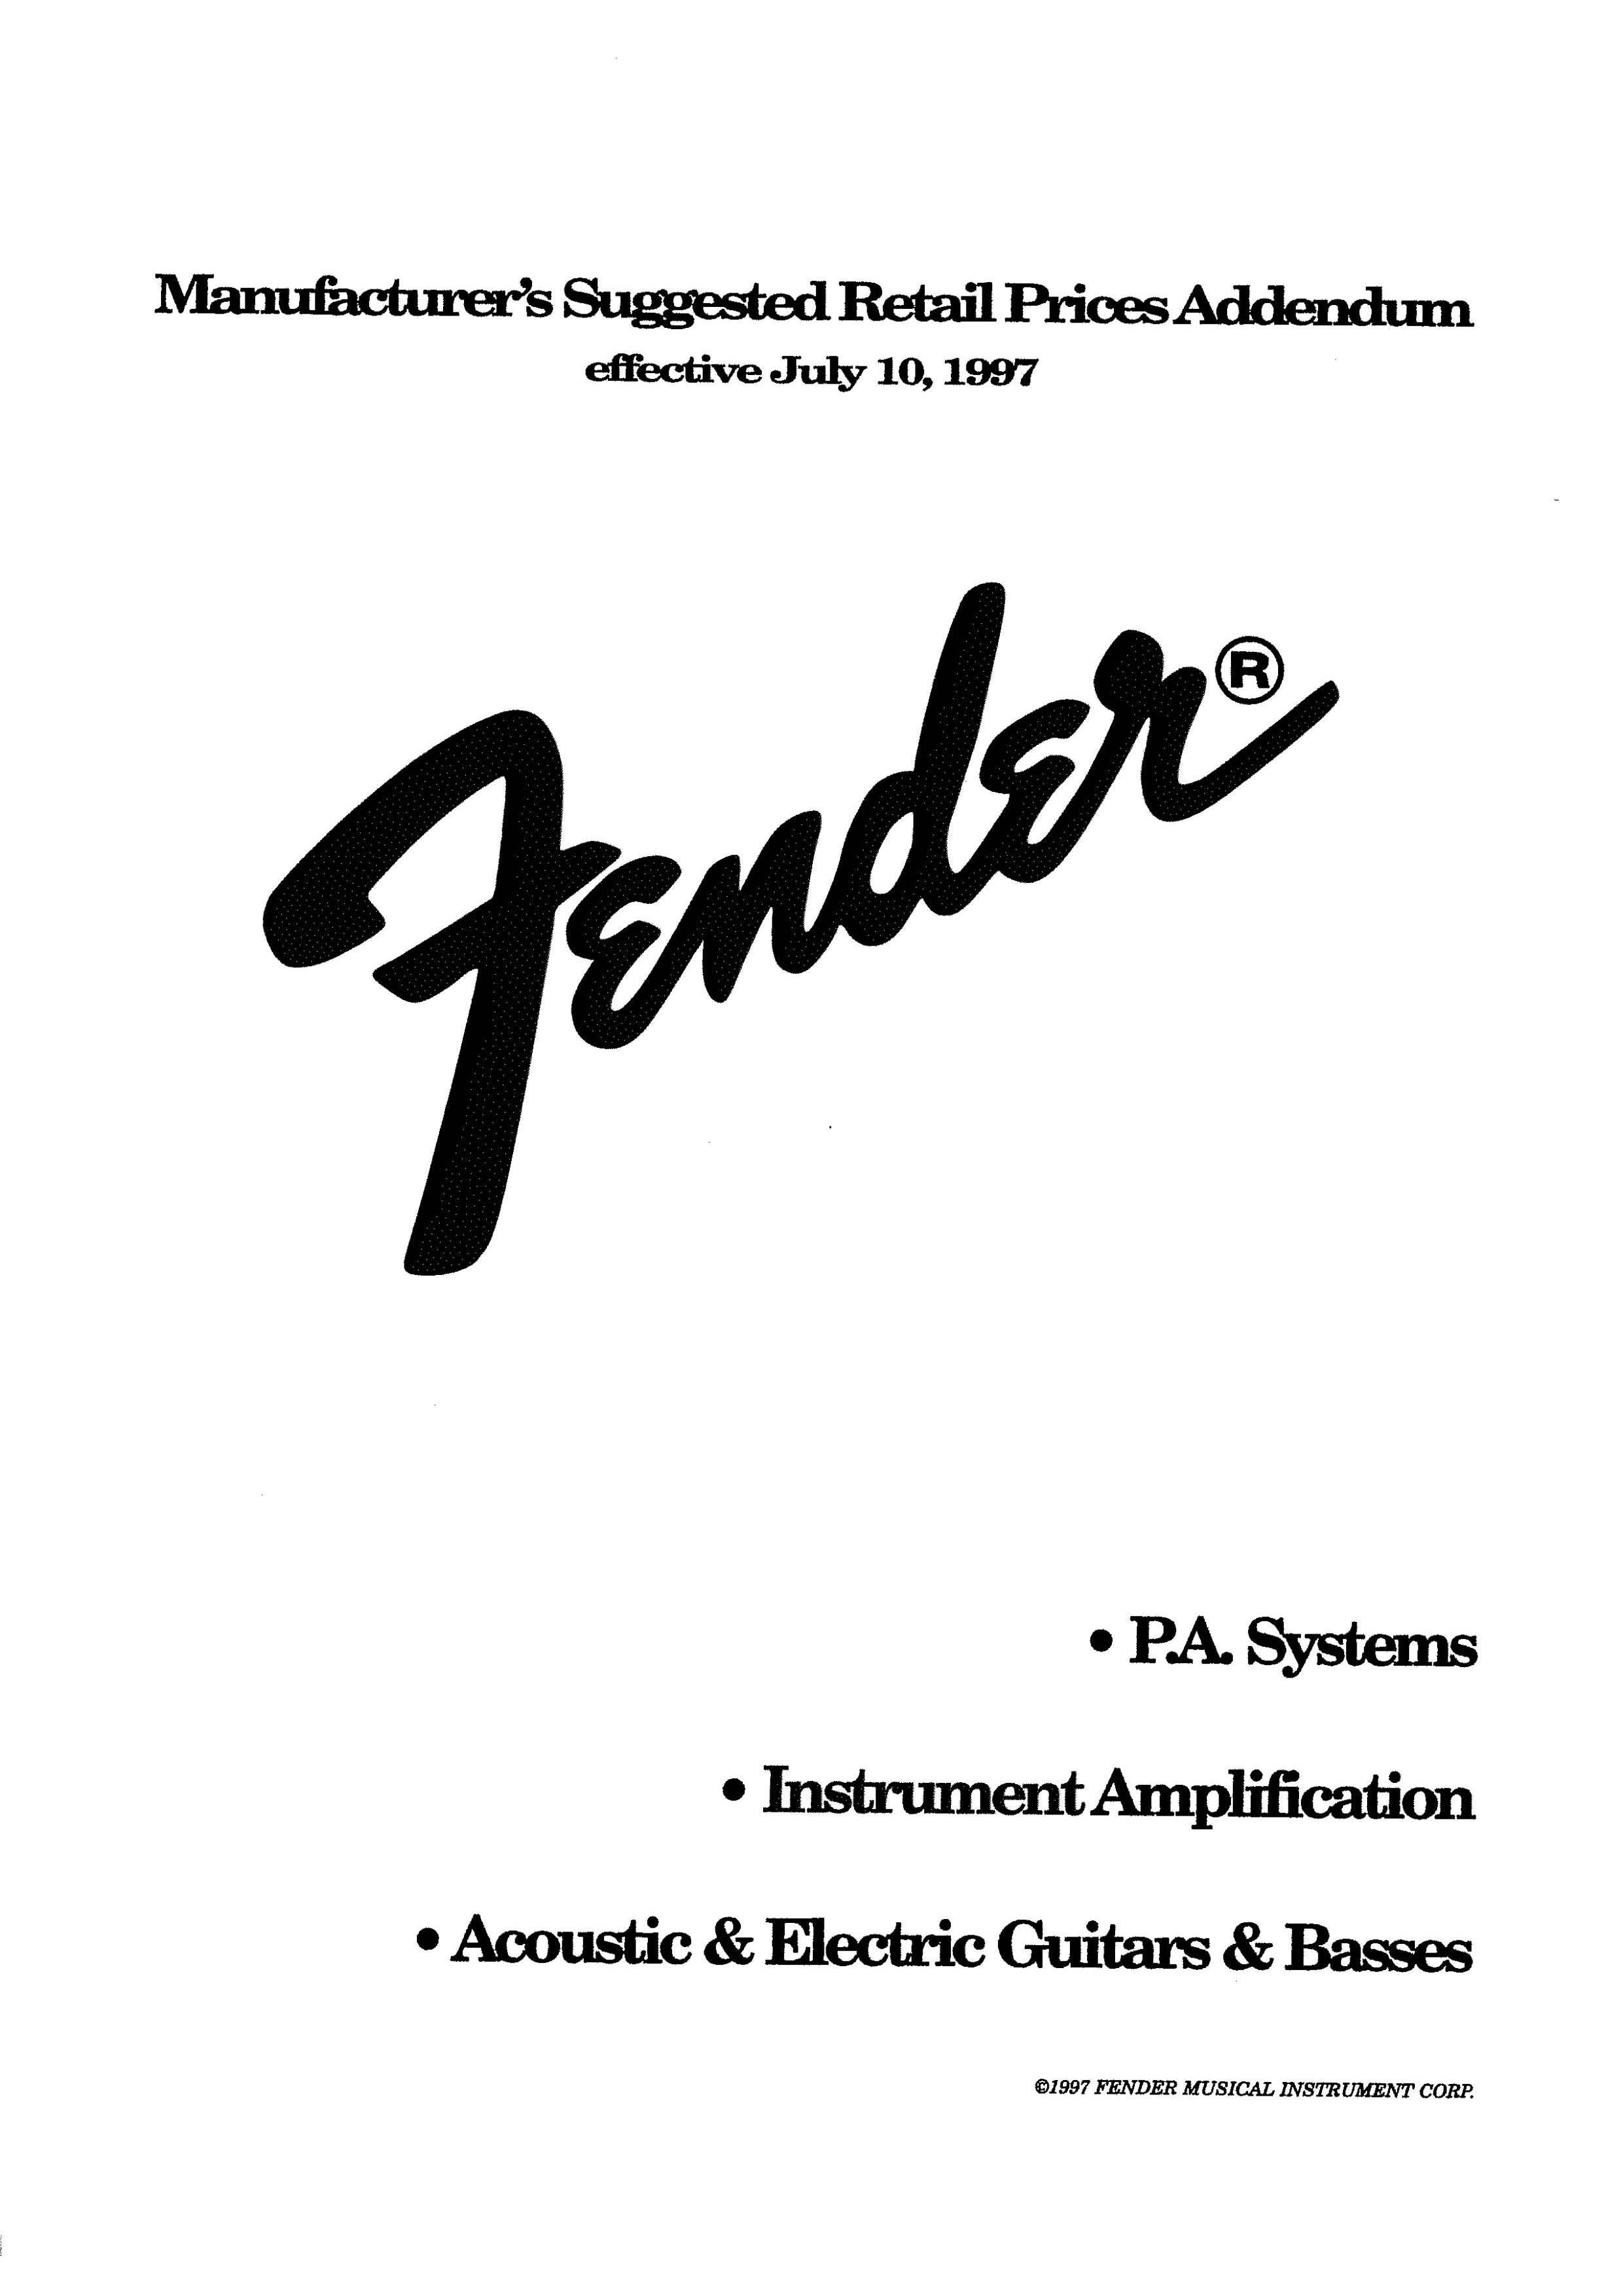 Fender Price list 1997